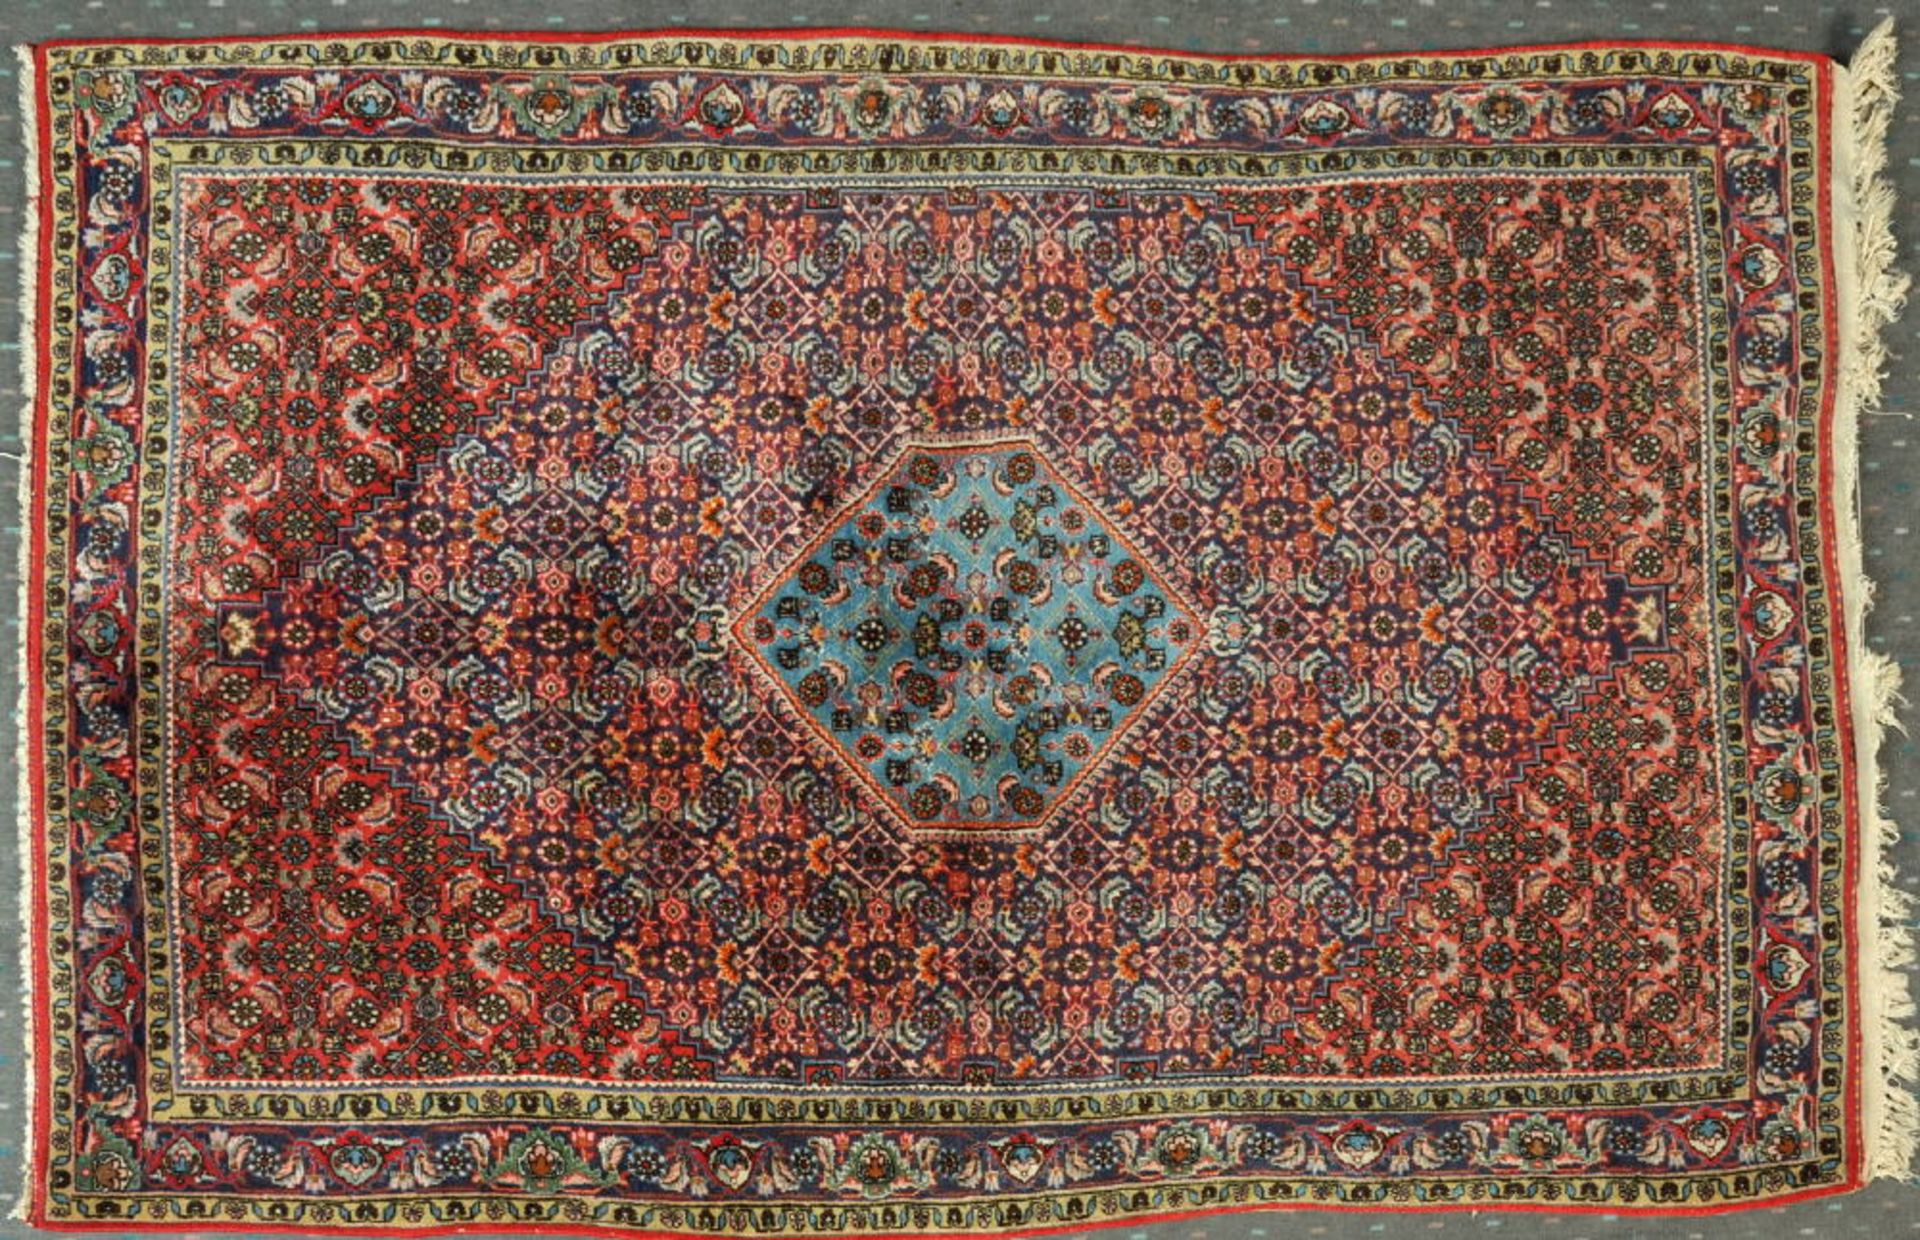 Bidjar, Persien, 111 x 165 cmälter, Wolle, feine Knüpfung, blau-/rotgrundig, mehrfarb.